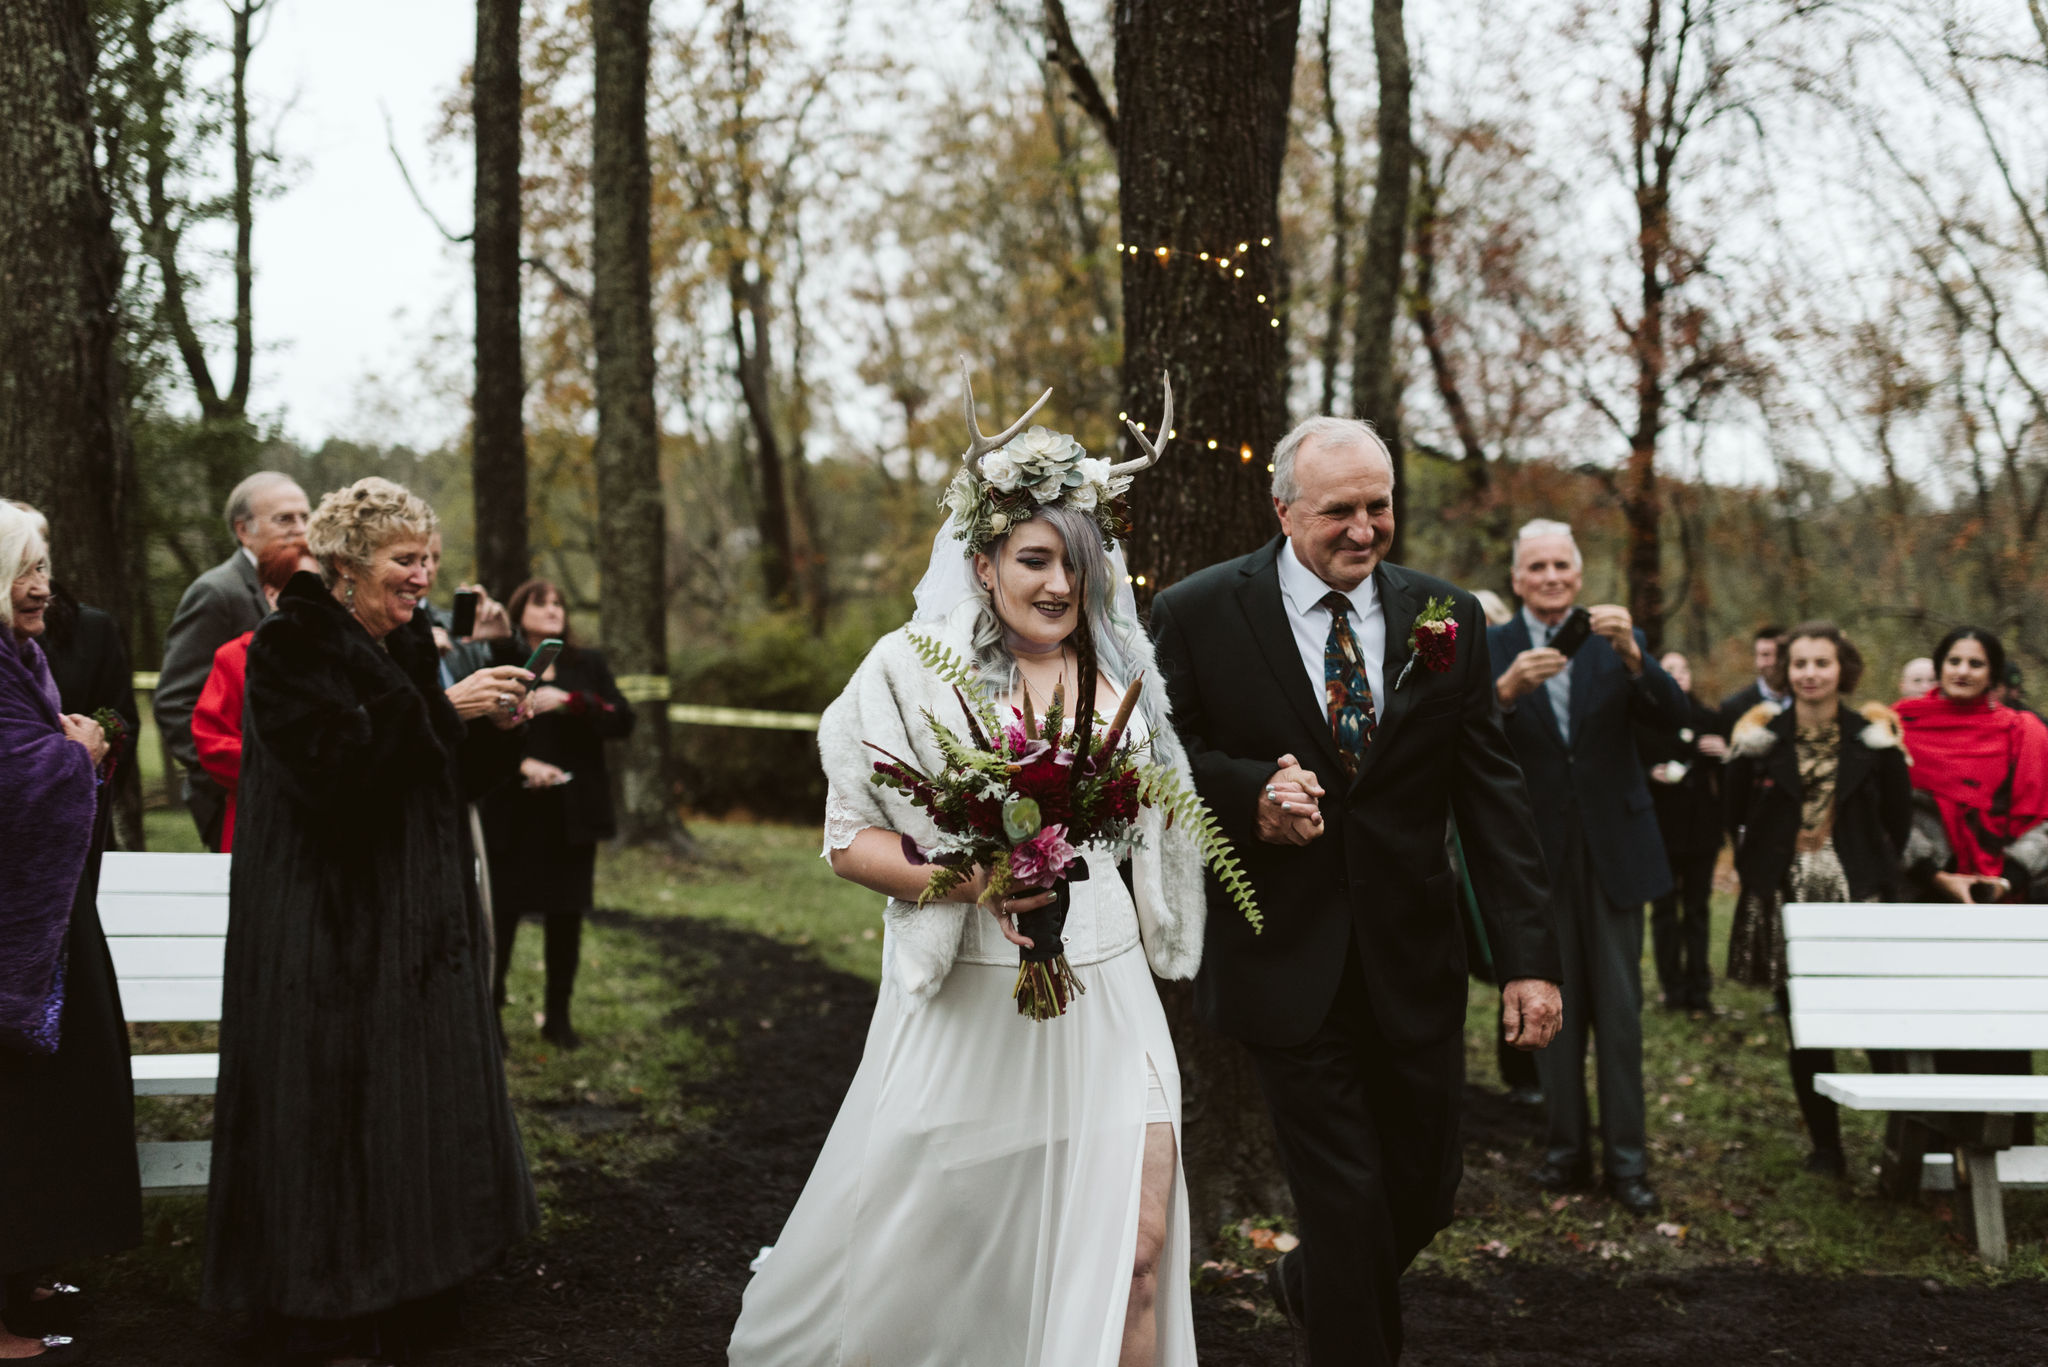  Maryland, Baltimore Wedding Photographer, Backyard Wedding, Fall, October, Dark Bohemian, Whimsical, Fun, Bride Walking Down Aisle with Her Father, The Modest Florist, Alternative Bride 